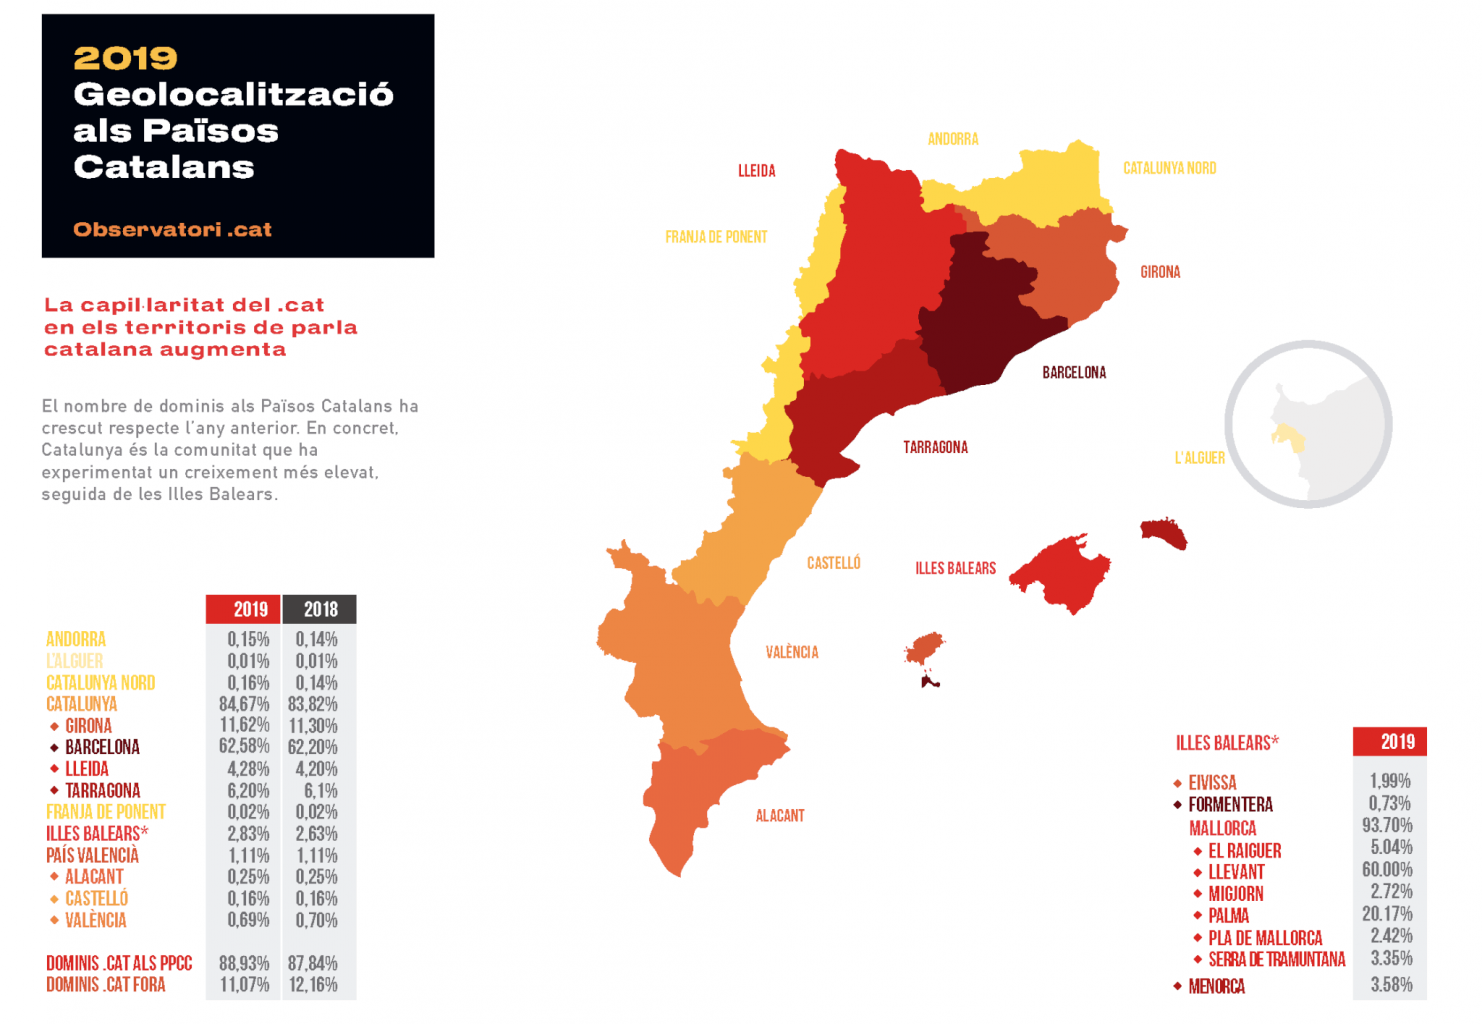 Distribution of .cat in Catalan regions